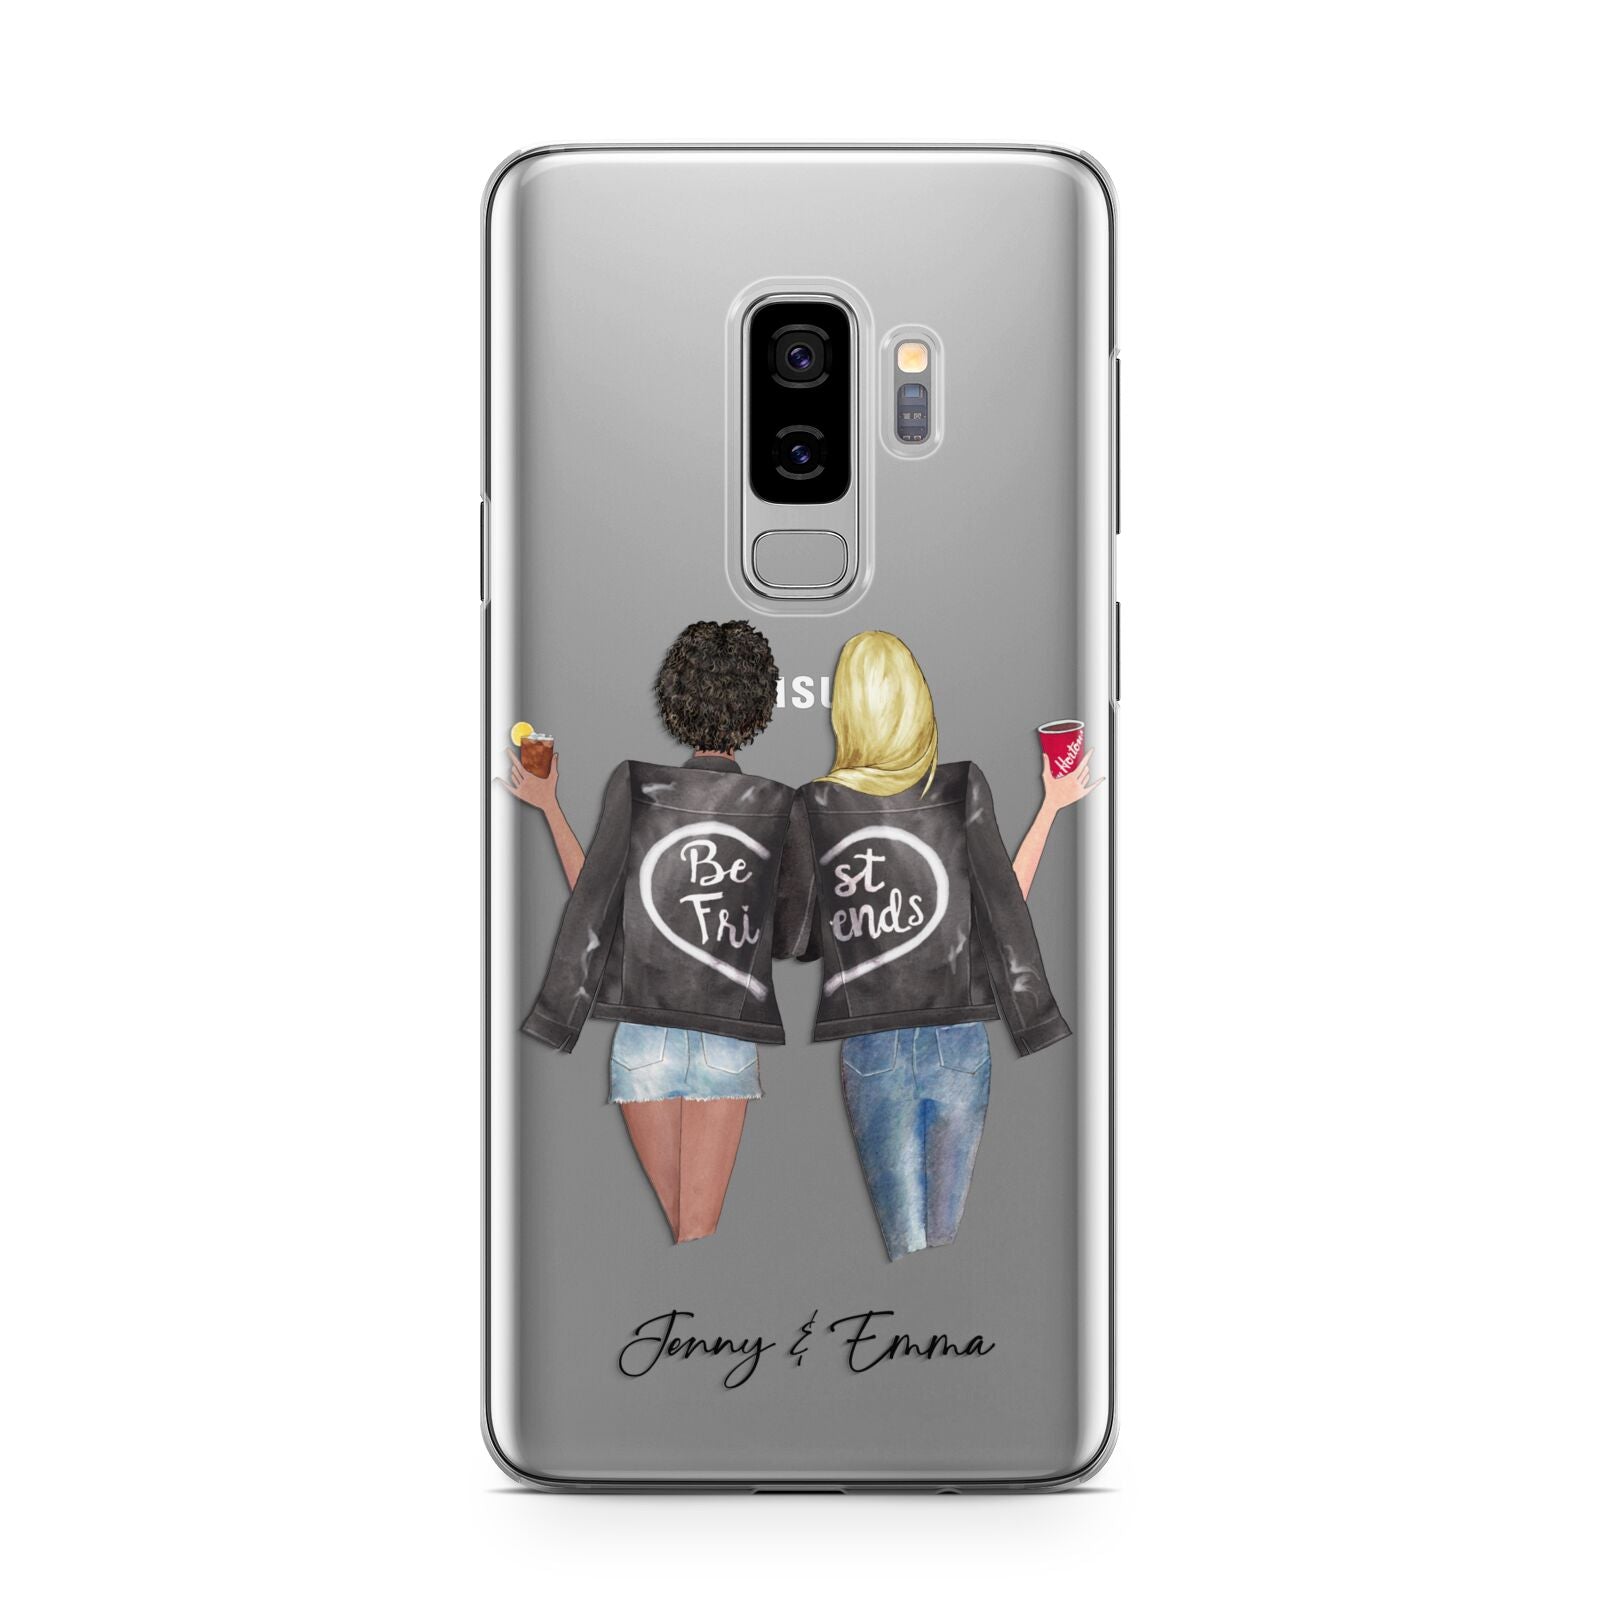 Best Friends Samsung Galaxy S9 Plus Case on Silver phone